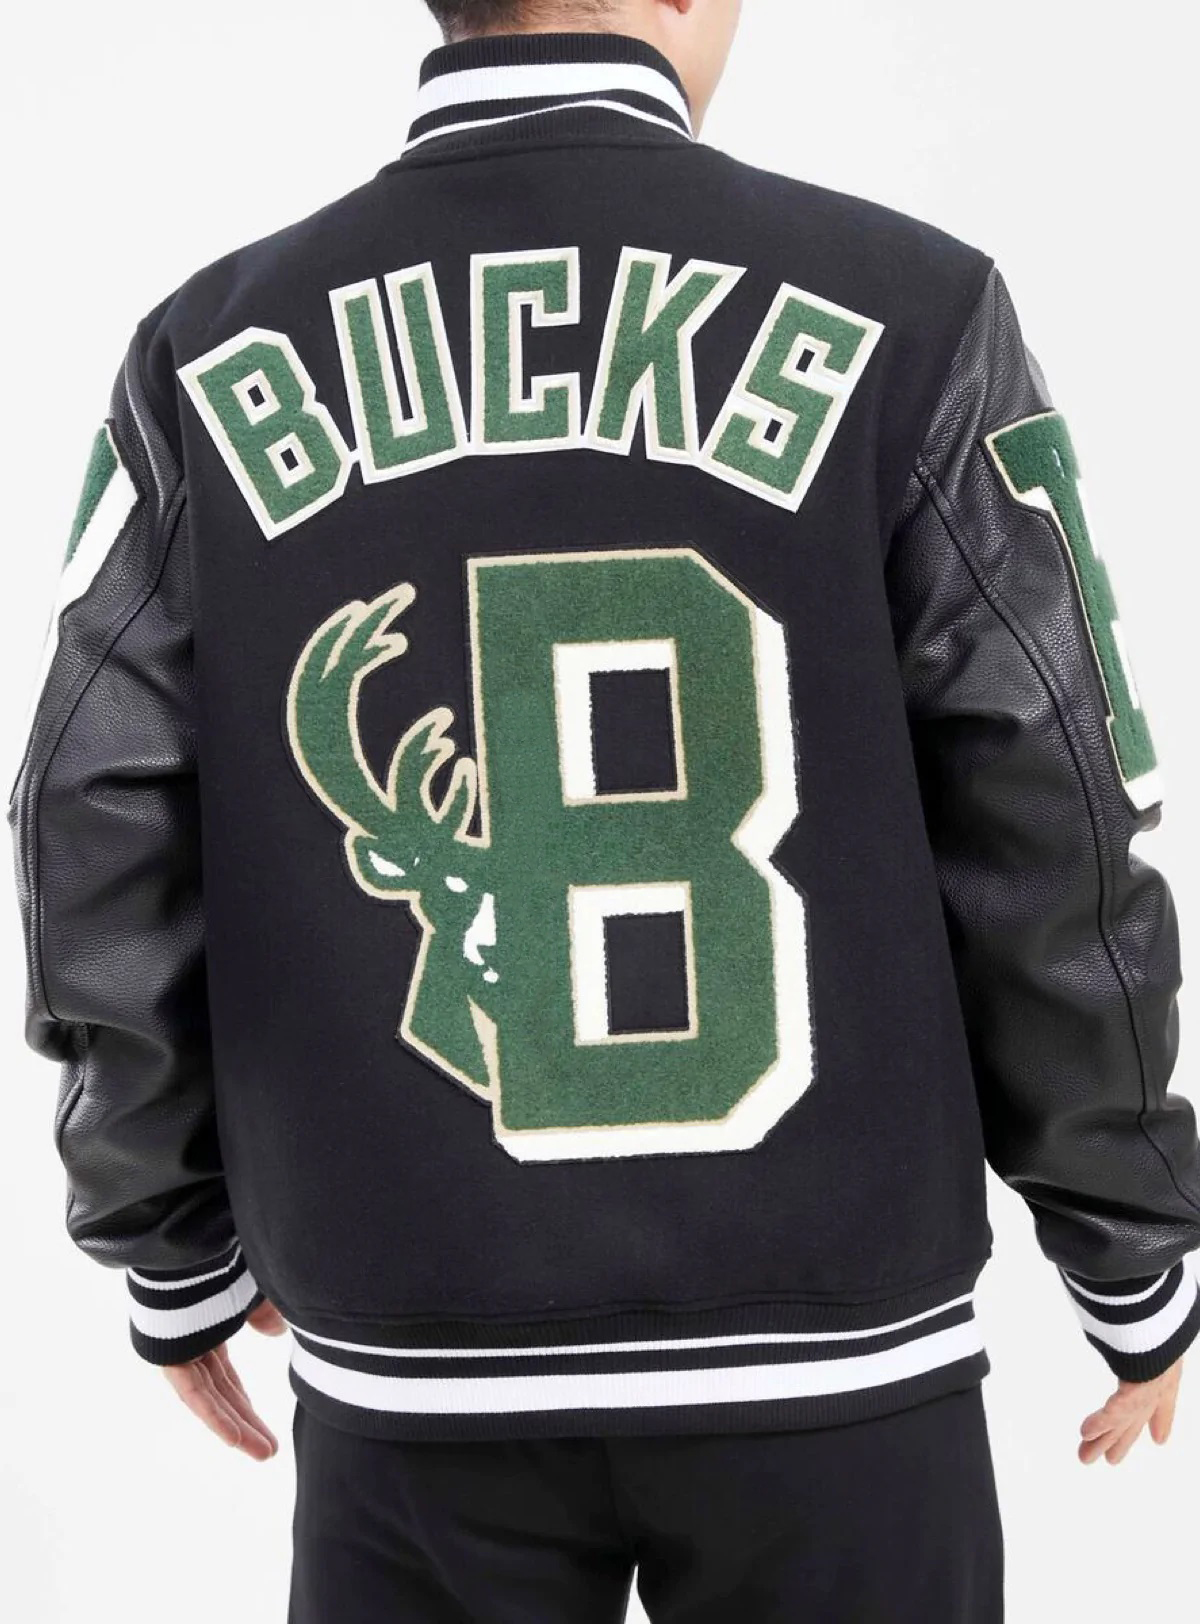 Maker of Jacket Fashion Jackets Milwaukee Bucks Black NBA Varsity